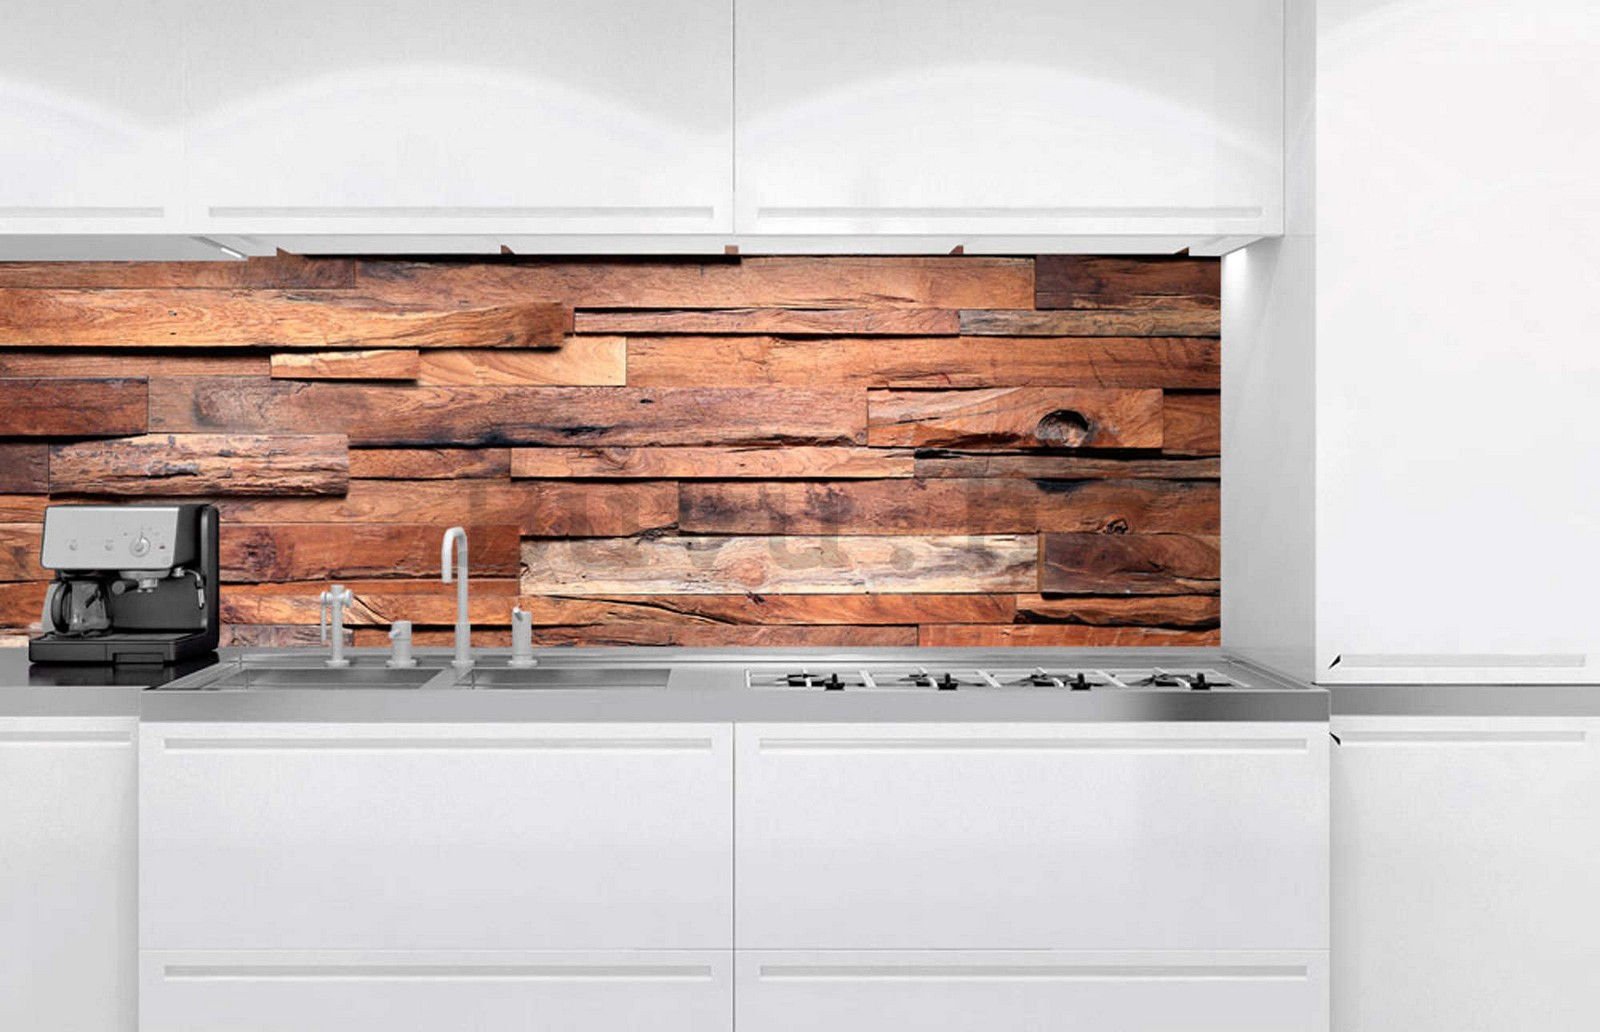 Samoljepljiva periva tapeta za kuhinju - Drveni zid, 180x60 cm